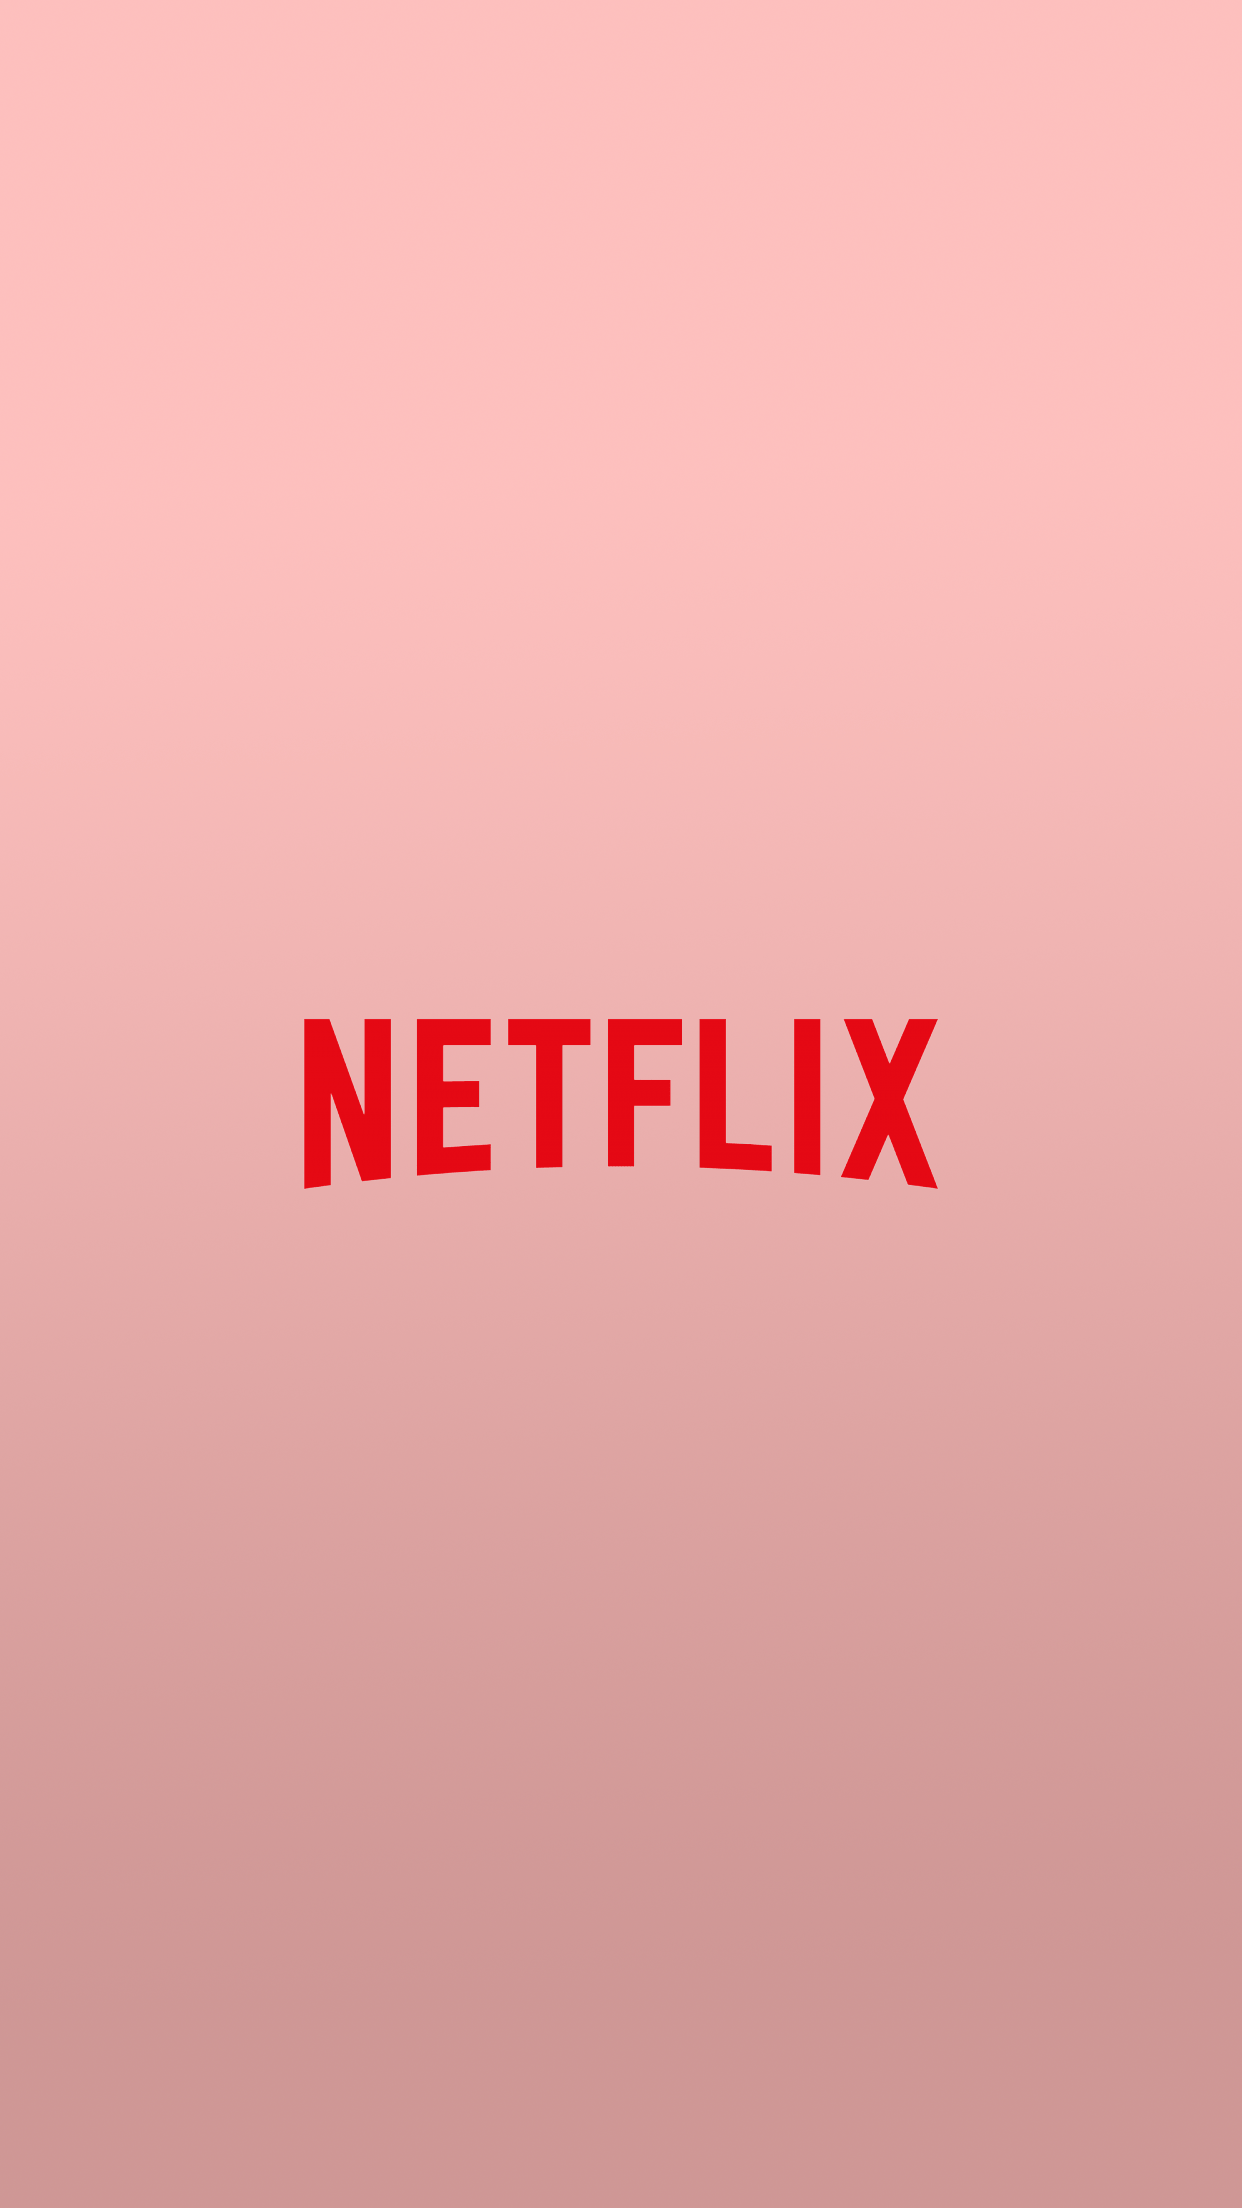 A pink background with the netflix logo - Netflix